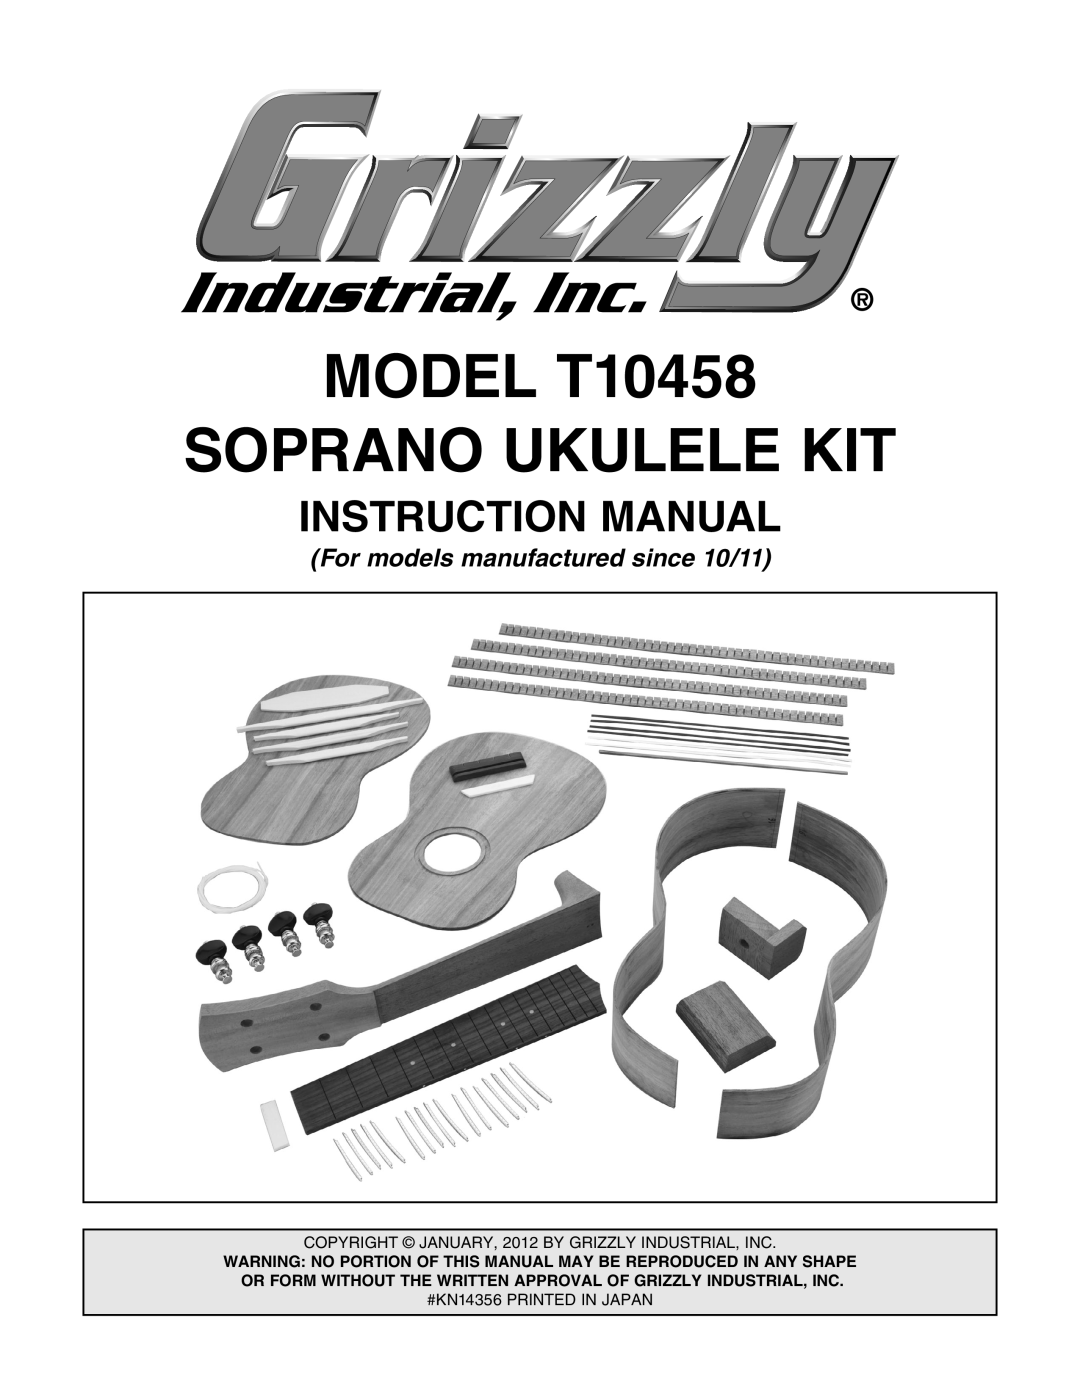 Grizzly instruction manual InSTRUCTION Manual, MODEL T10458 SOPRANO UKULELE KIT, For models manufactured since 10/11 